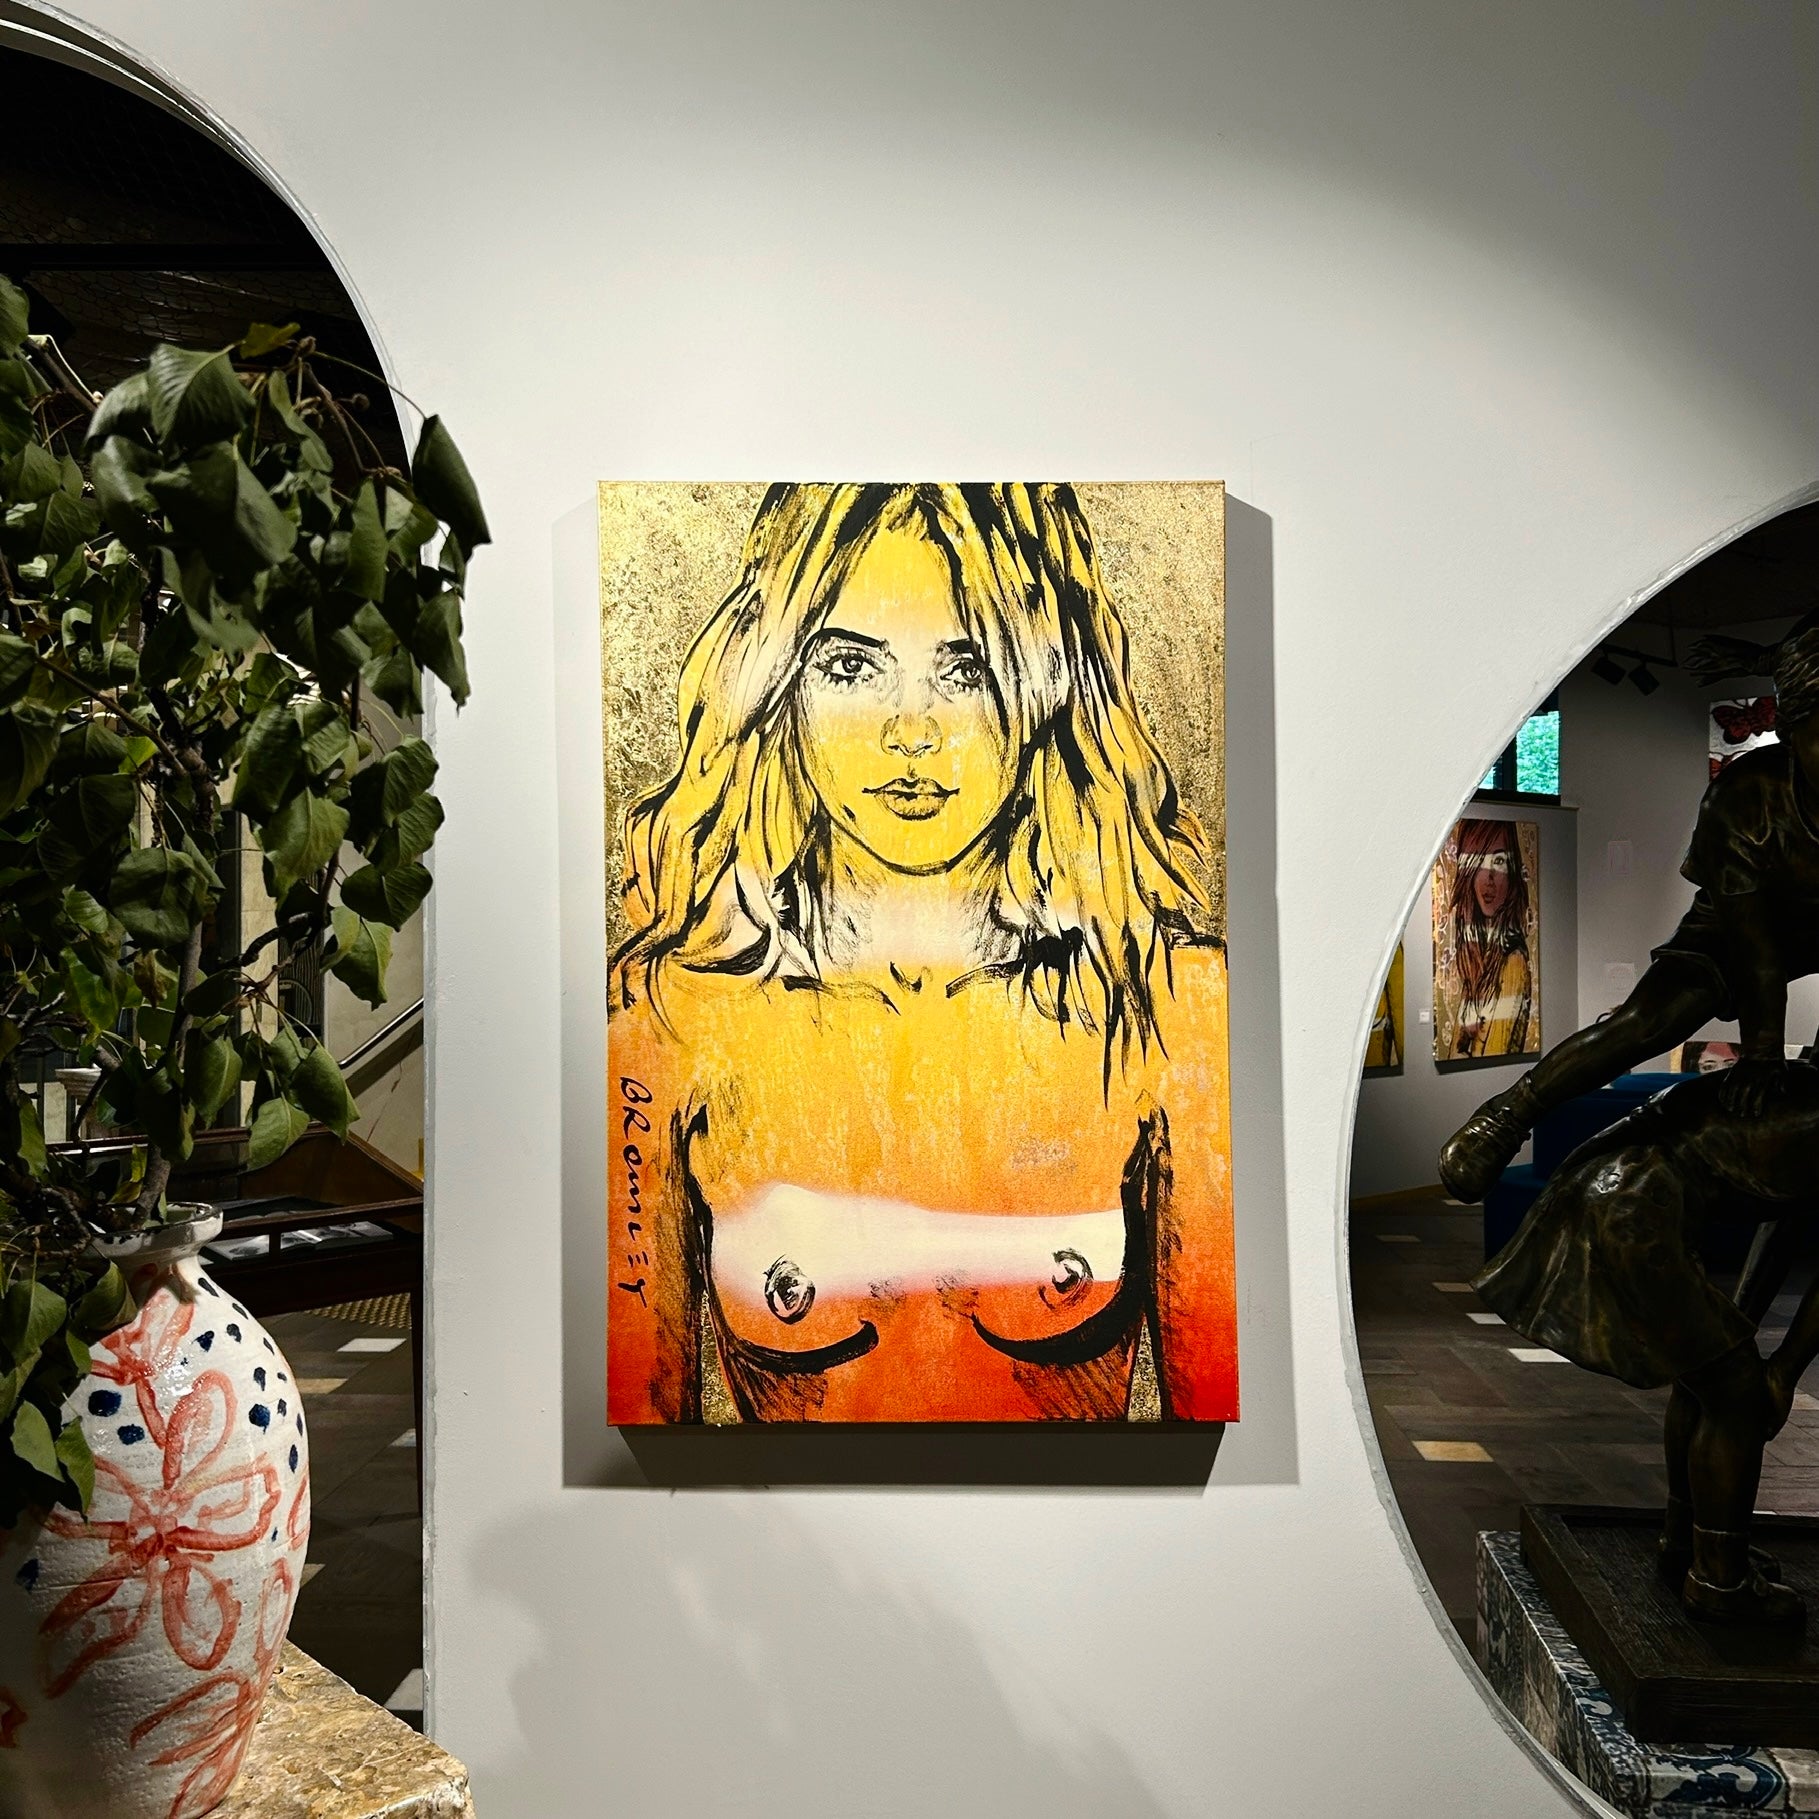 'Ashley' David Bromley. Acrylic on canvas with gold leaf gilding. 90 x 60 cm